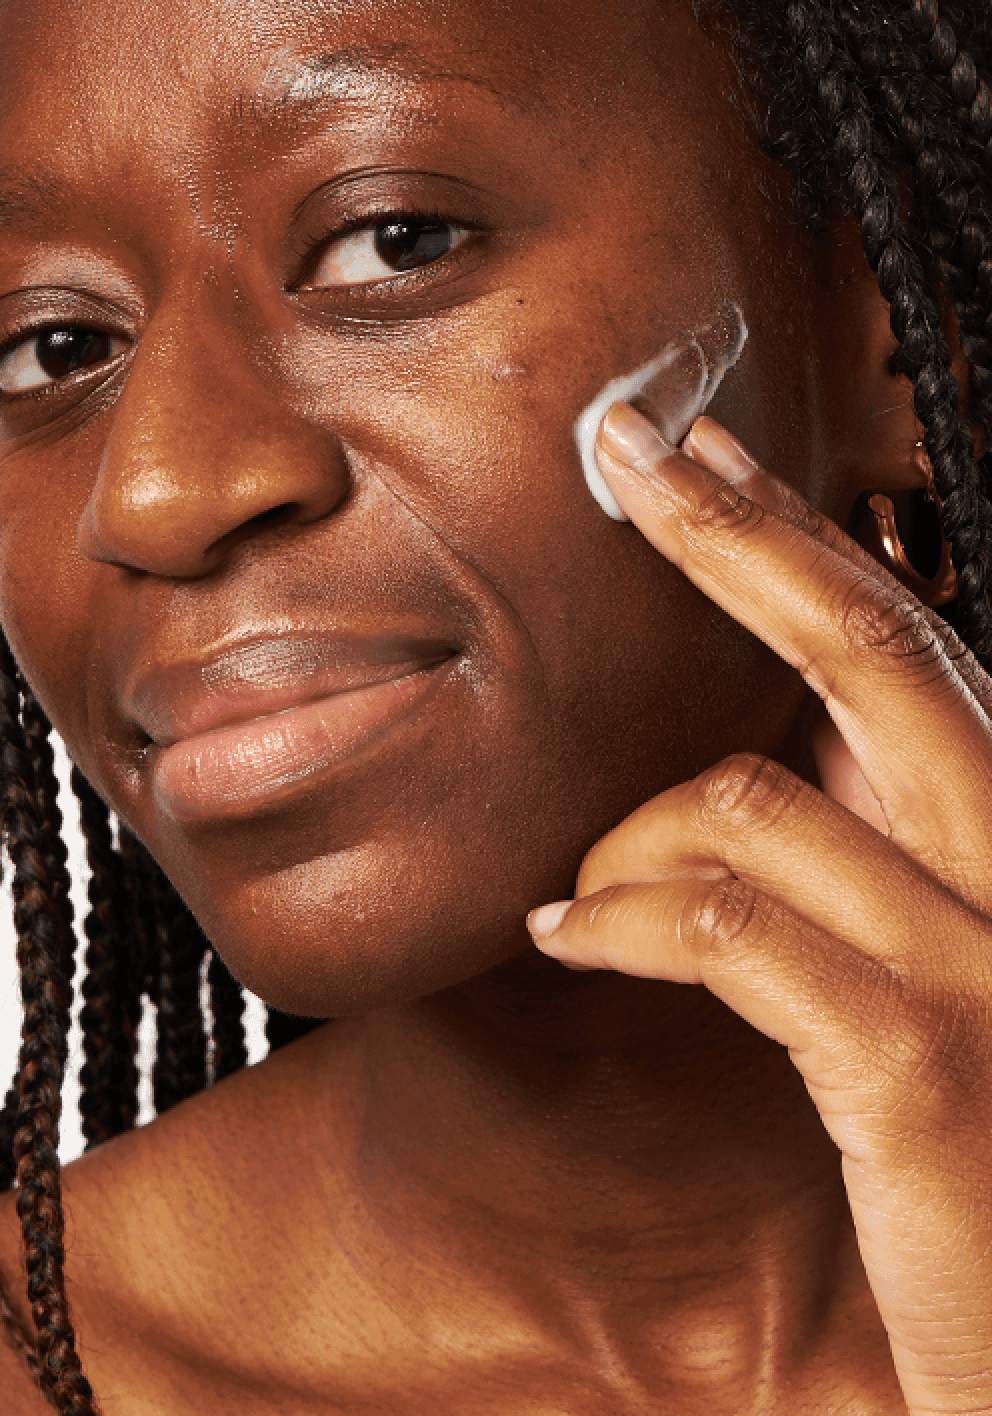 Woman applying facial acne treatment to her cheek.